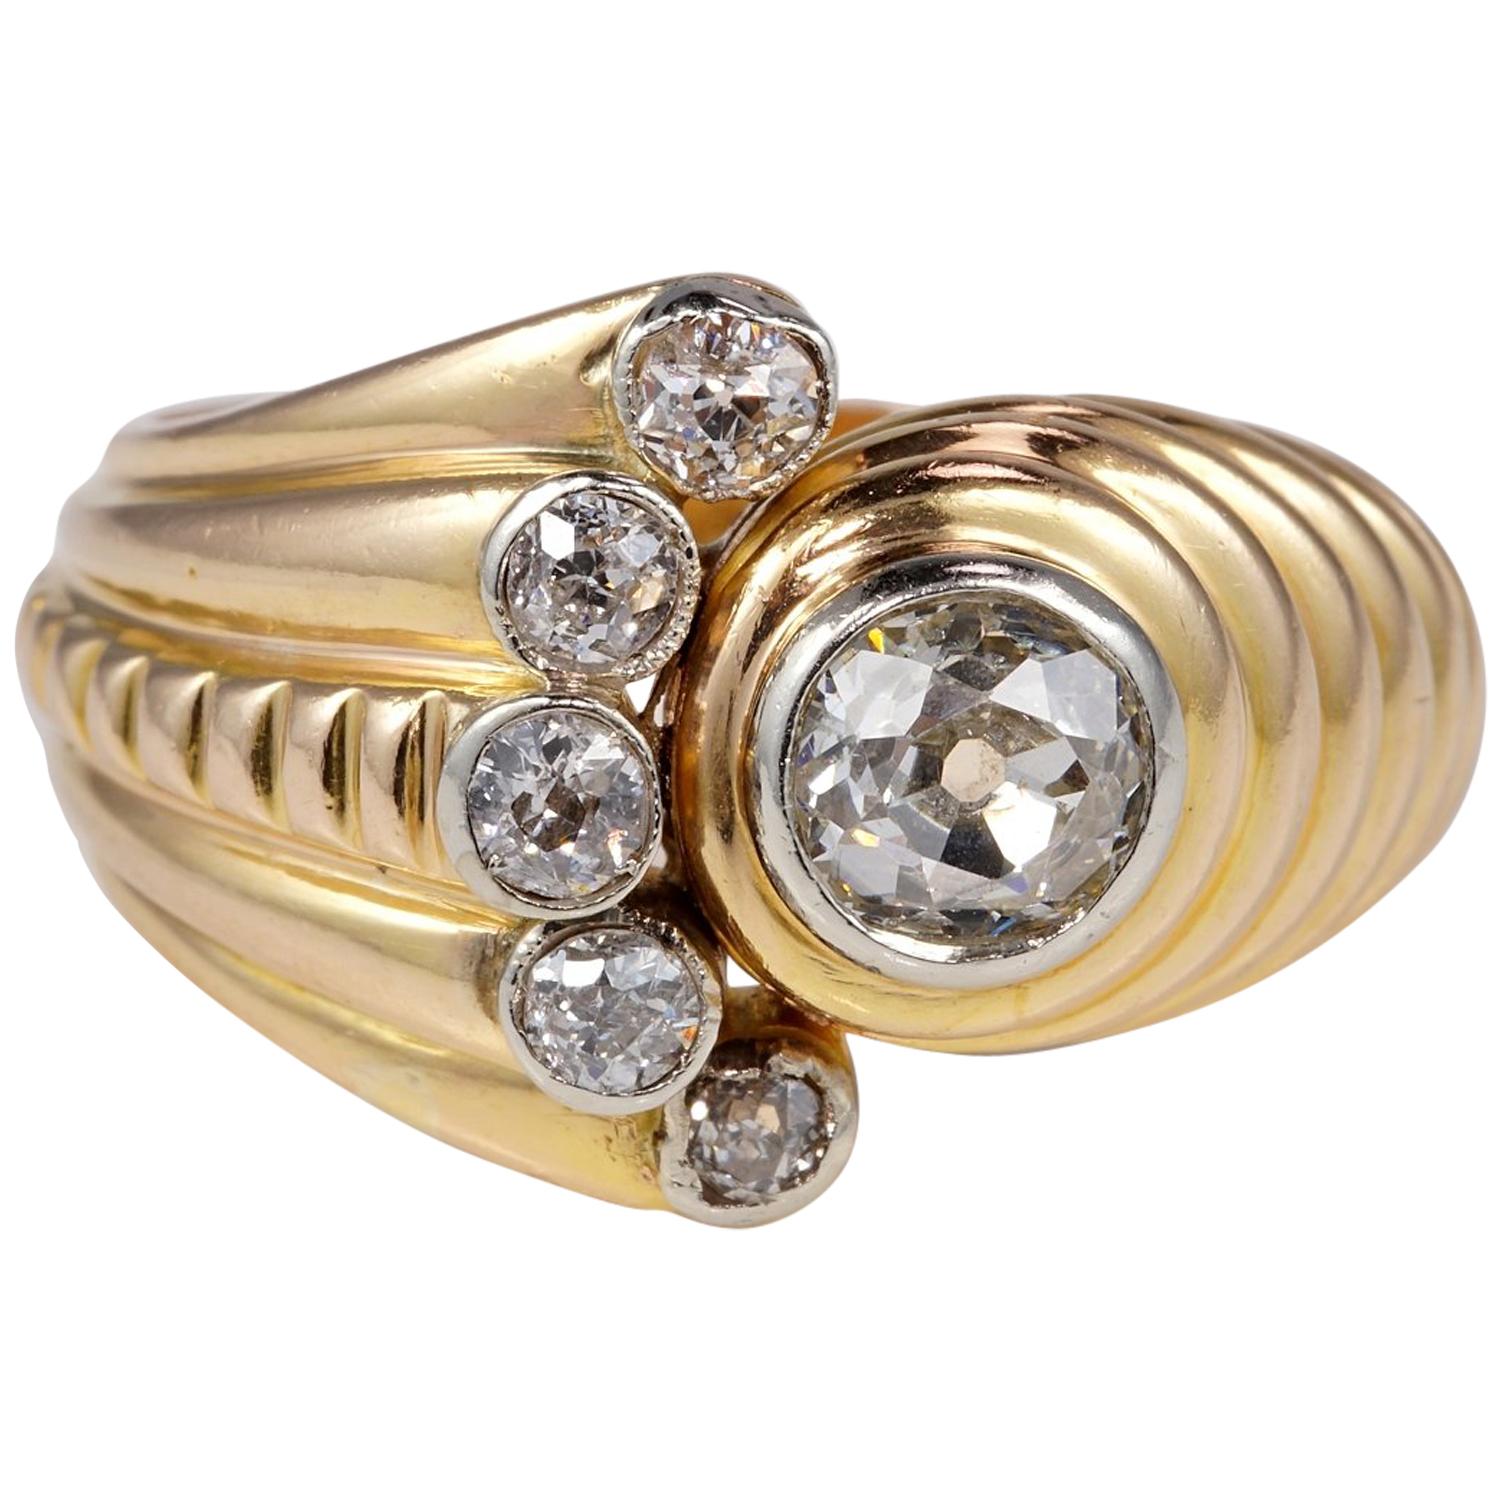 Spectacular Retro 1.05 Carat Old Cut Diamond Rare Tourbillon Ring For Sale